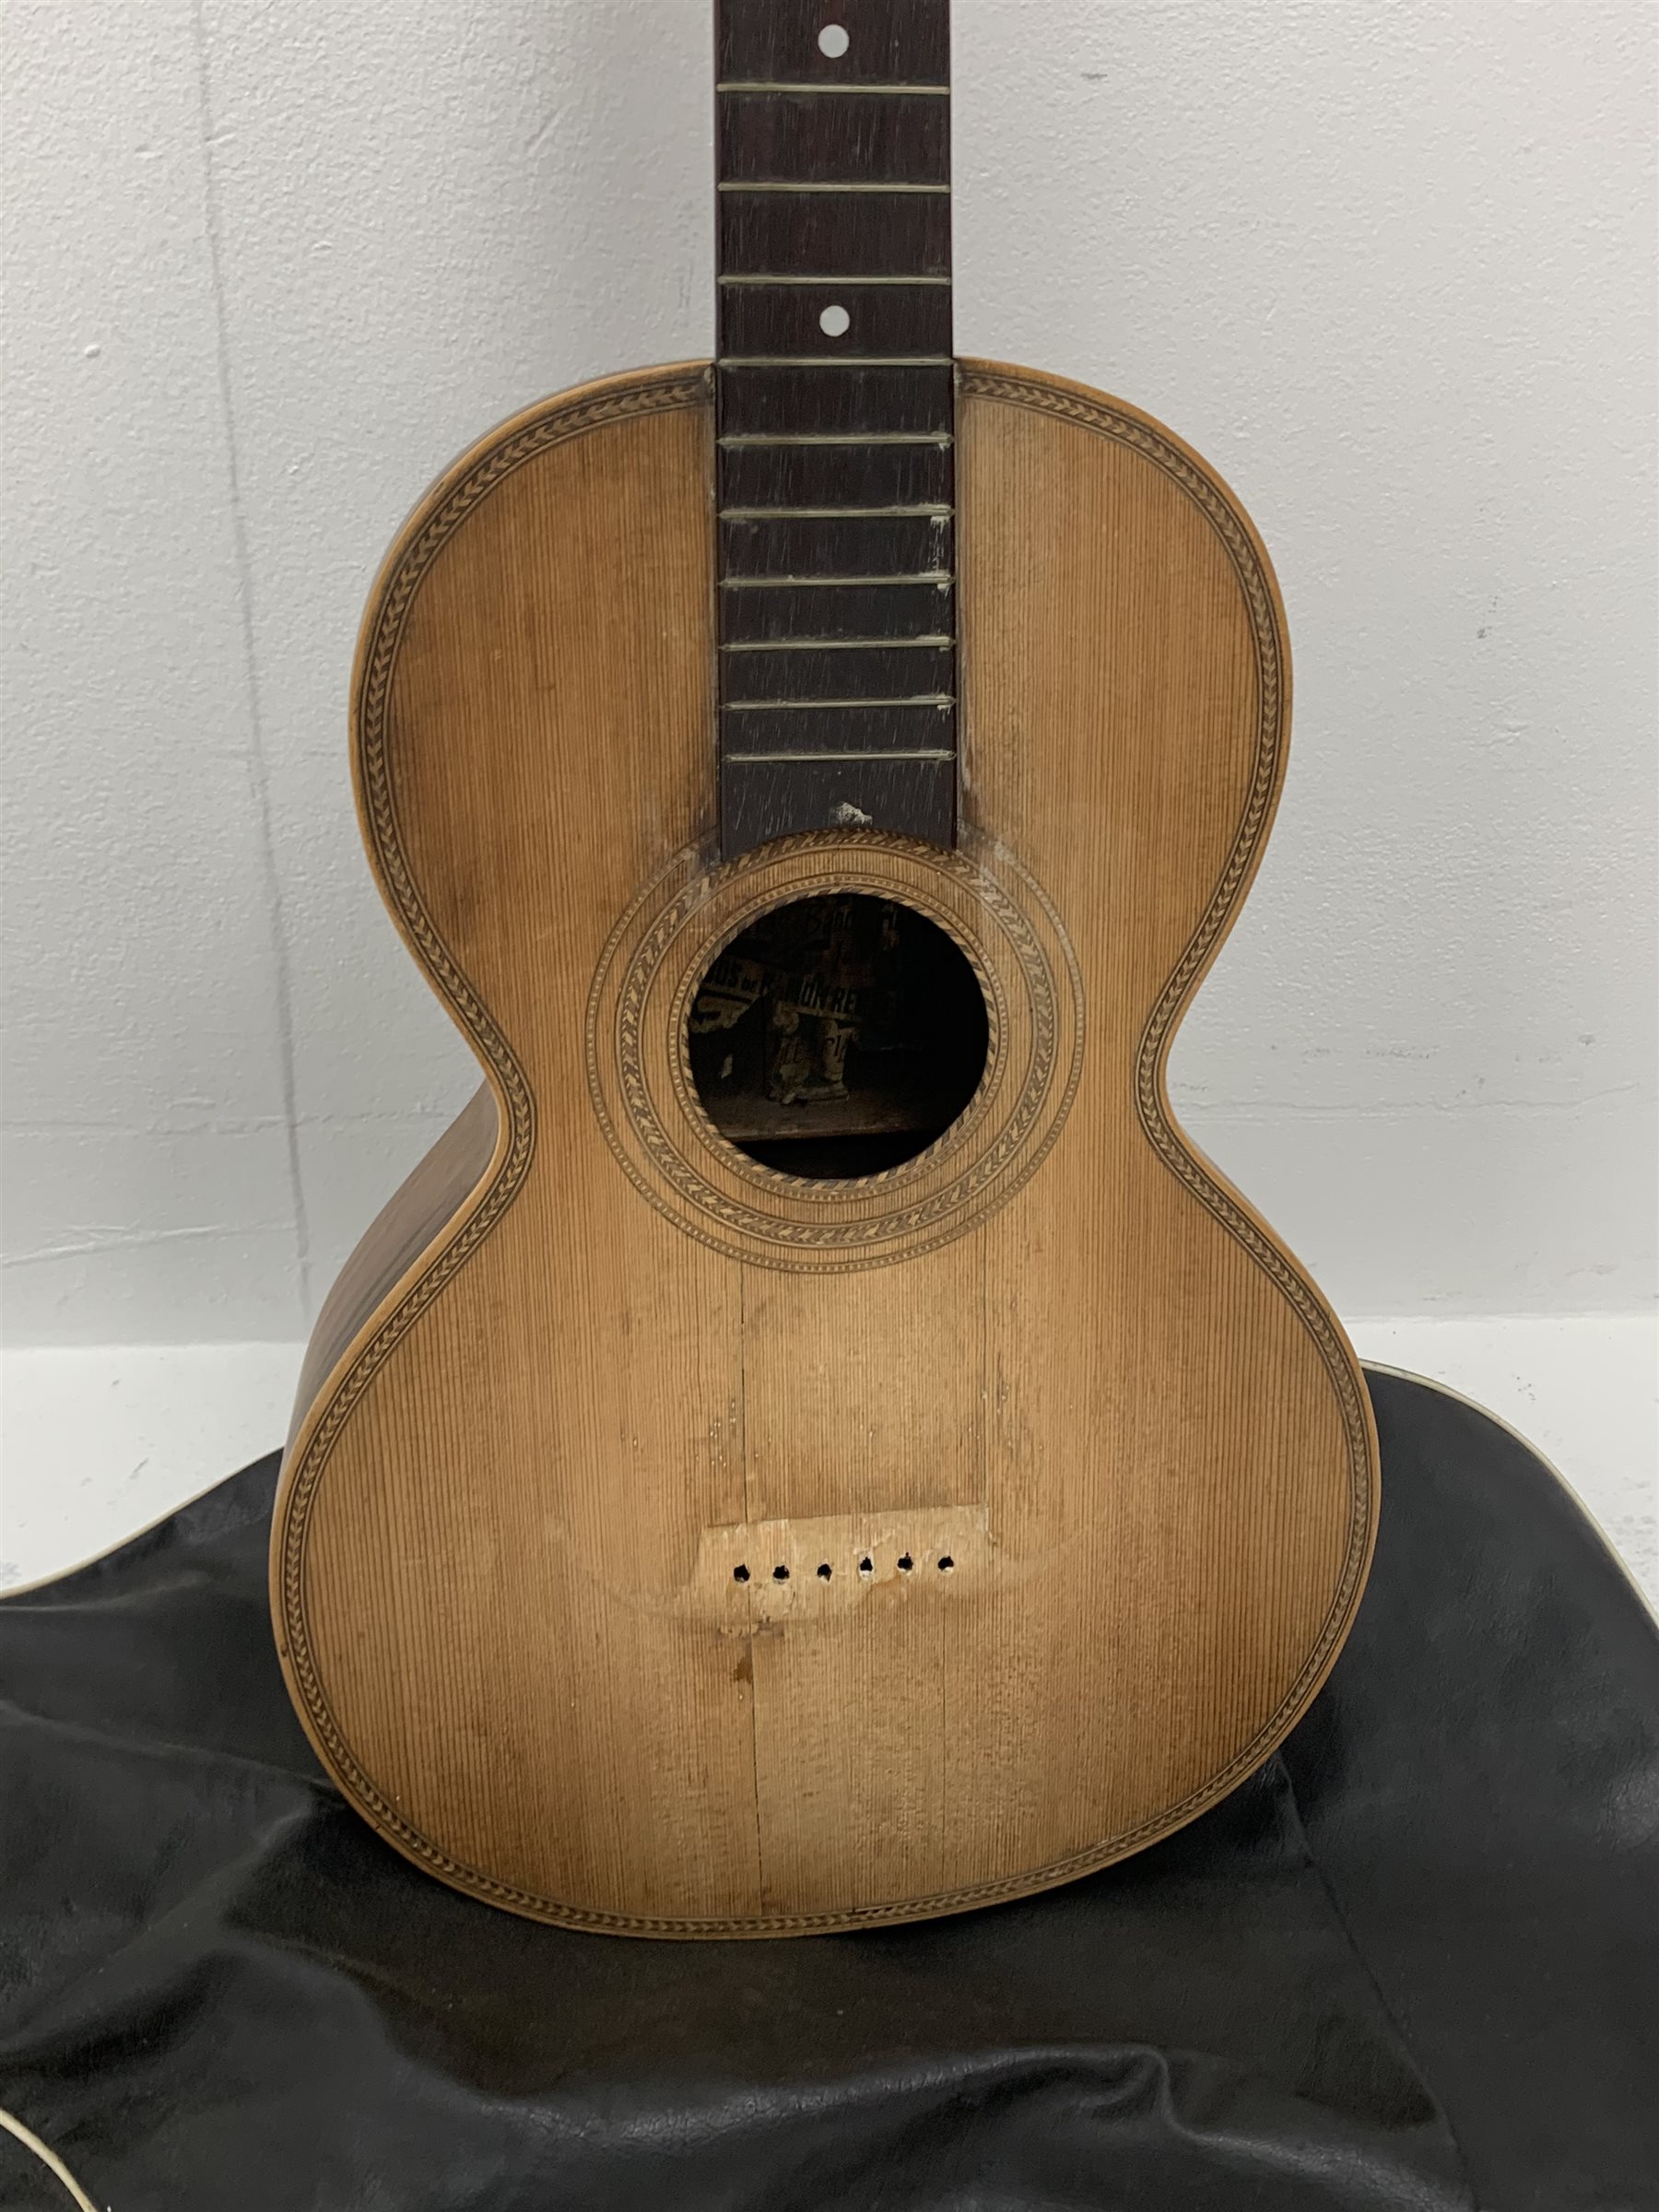 Early 20th century Brazilian Rosewood guitar, labelled Hijos de Ramon Redueyo, Valencia, in carryin - Image 3 of 6